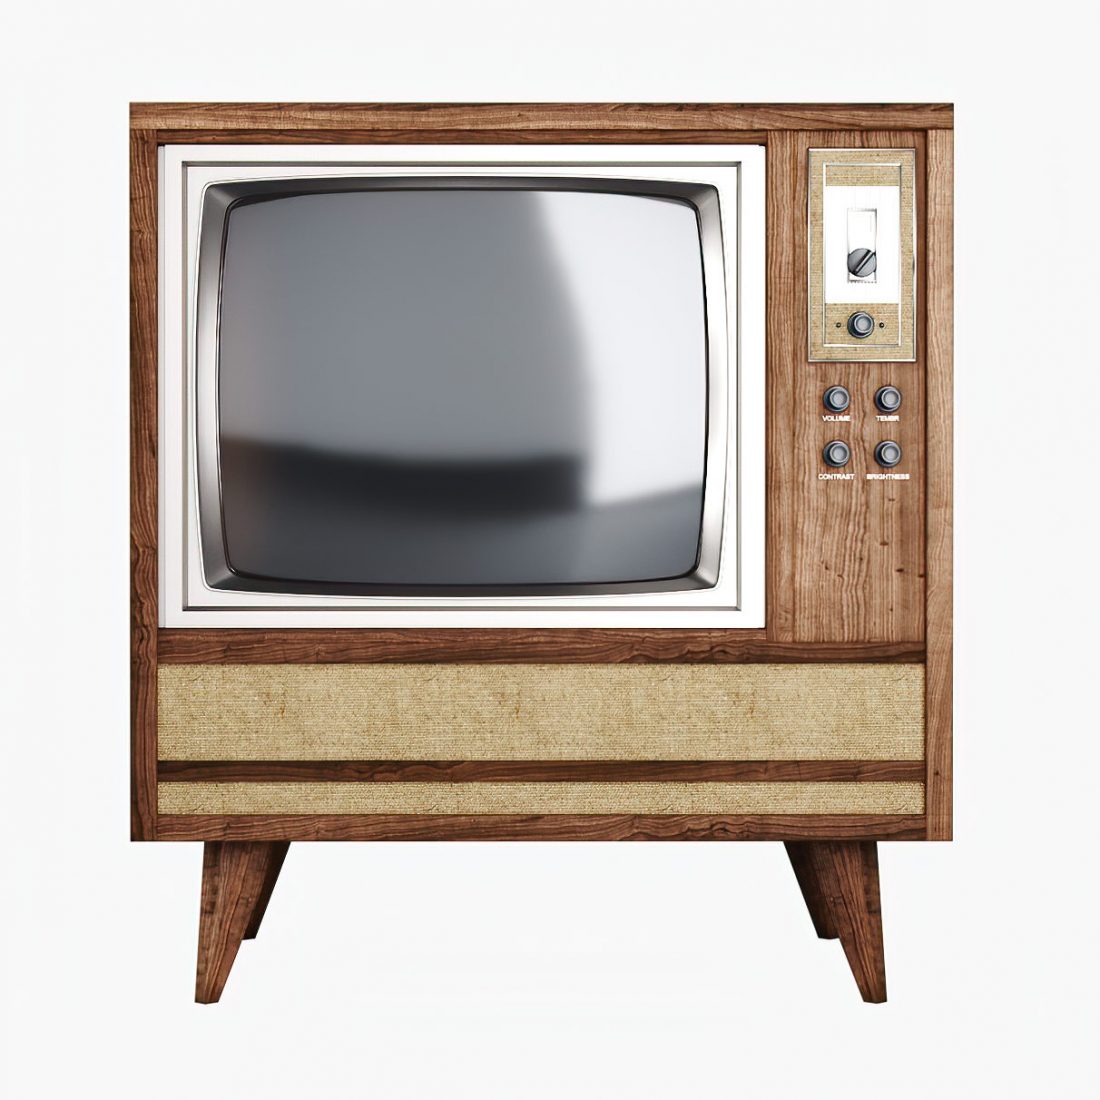 Old Tv - 3D Model for Corona